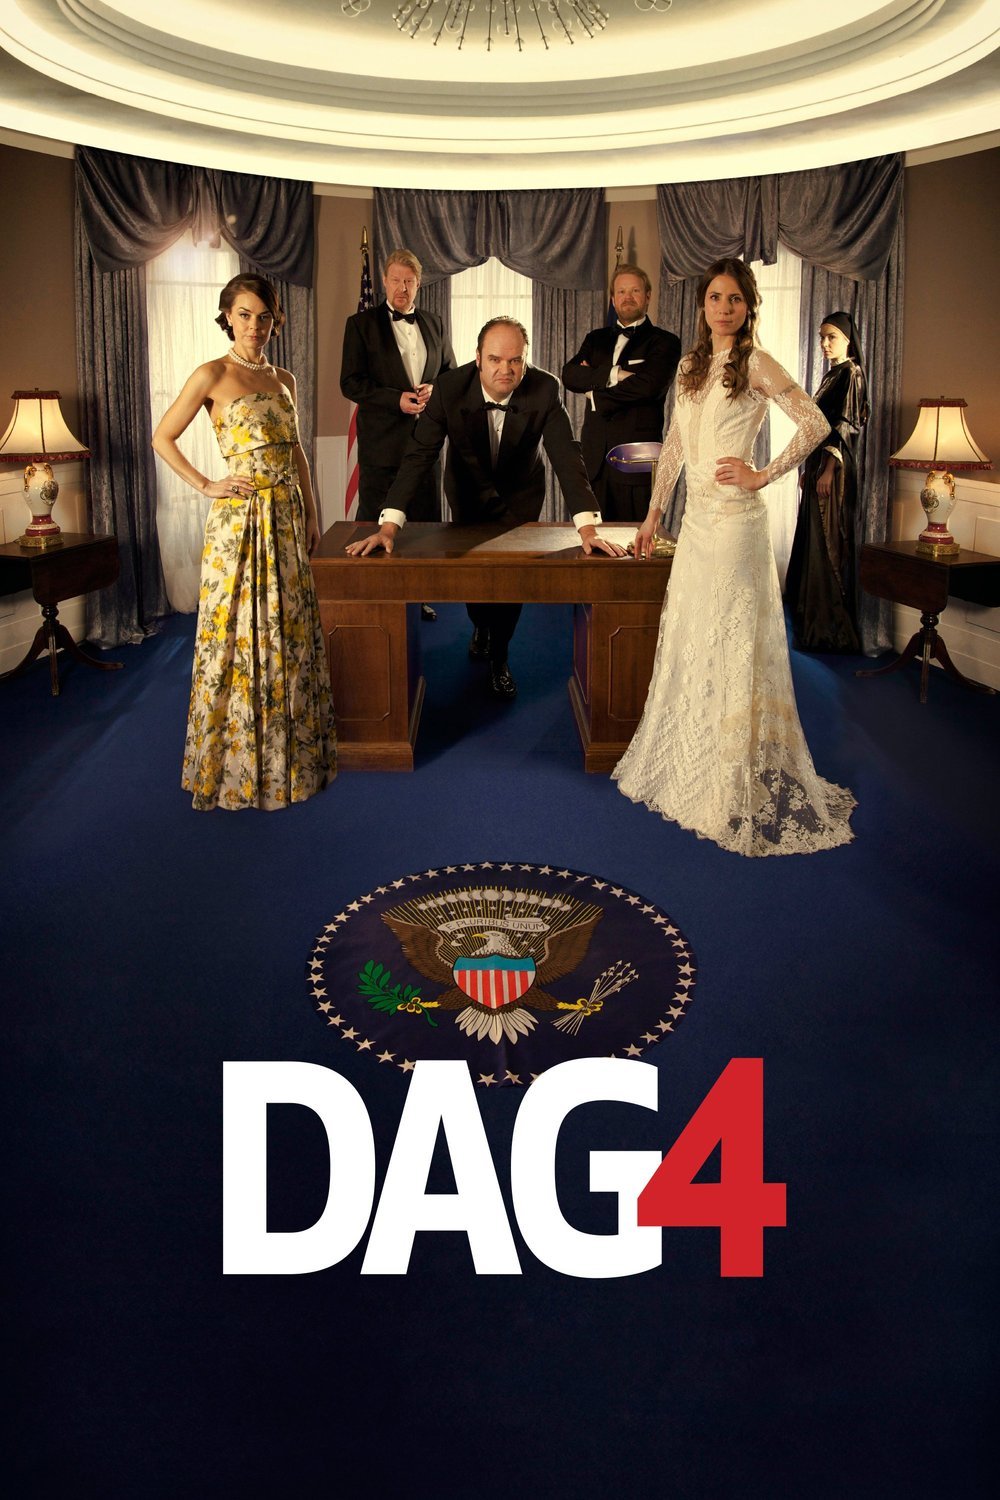 Norwegian poster of the movie Dag